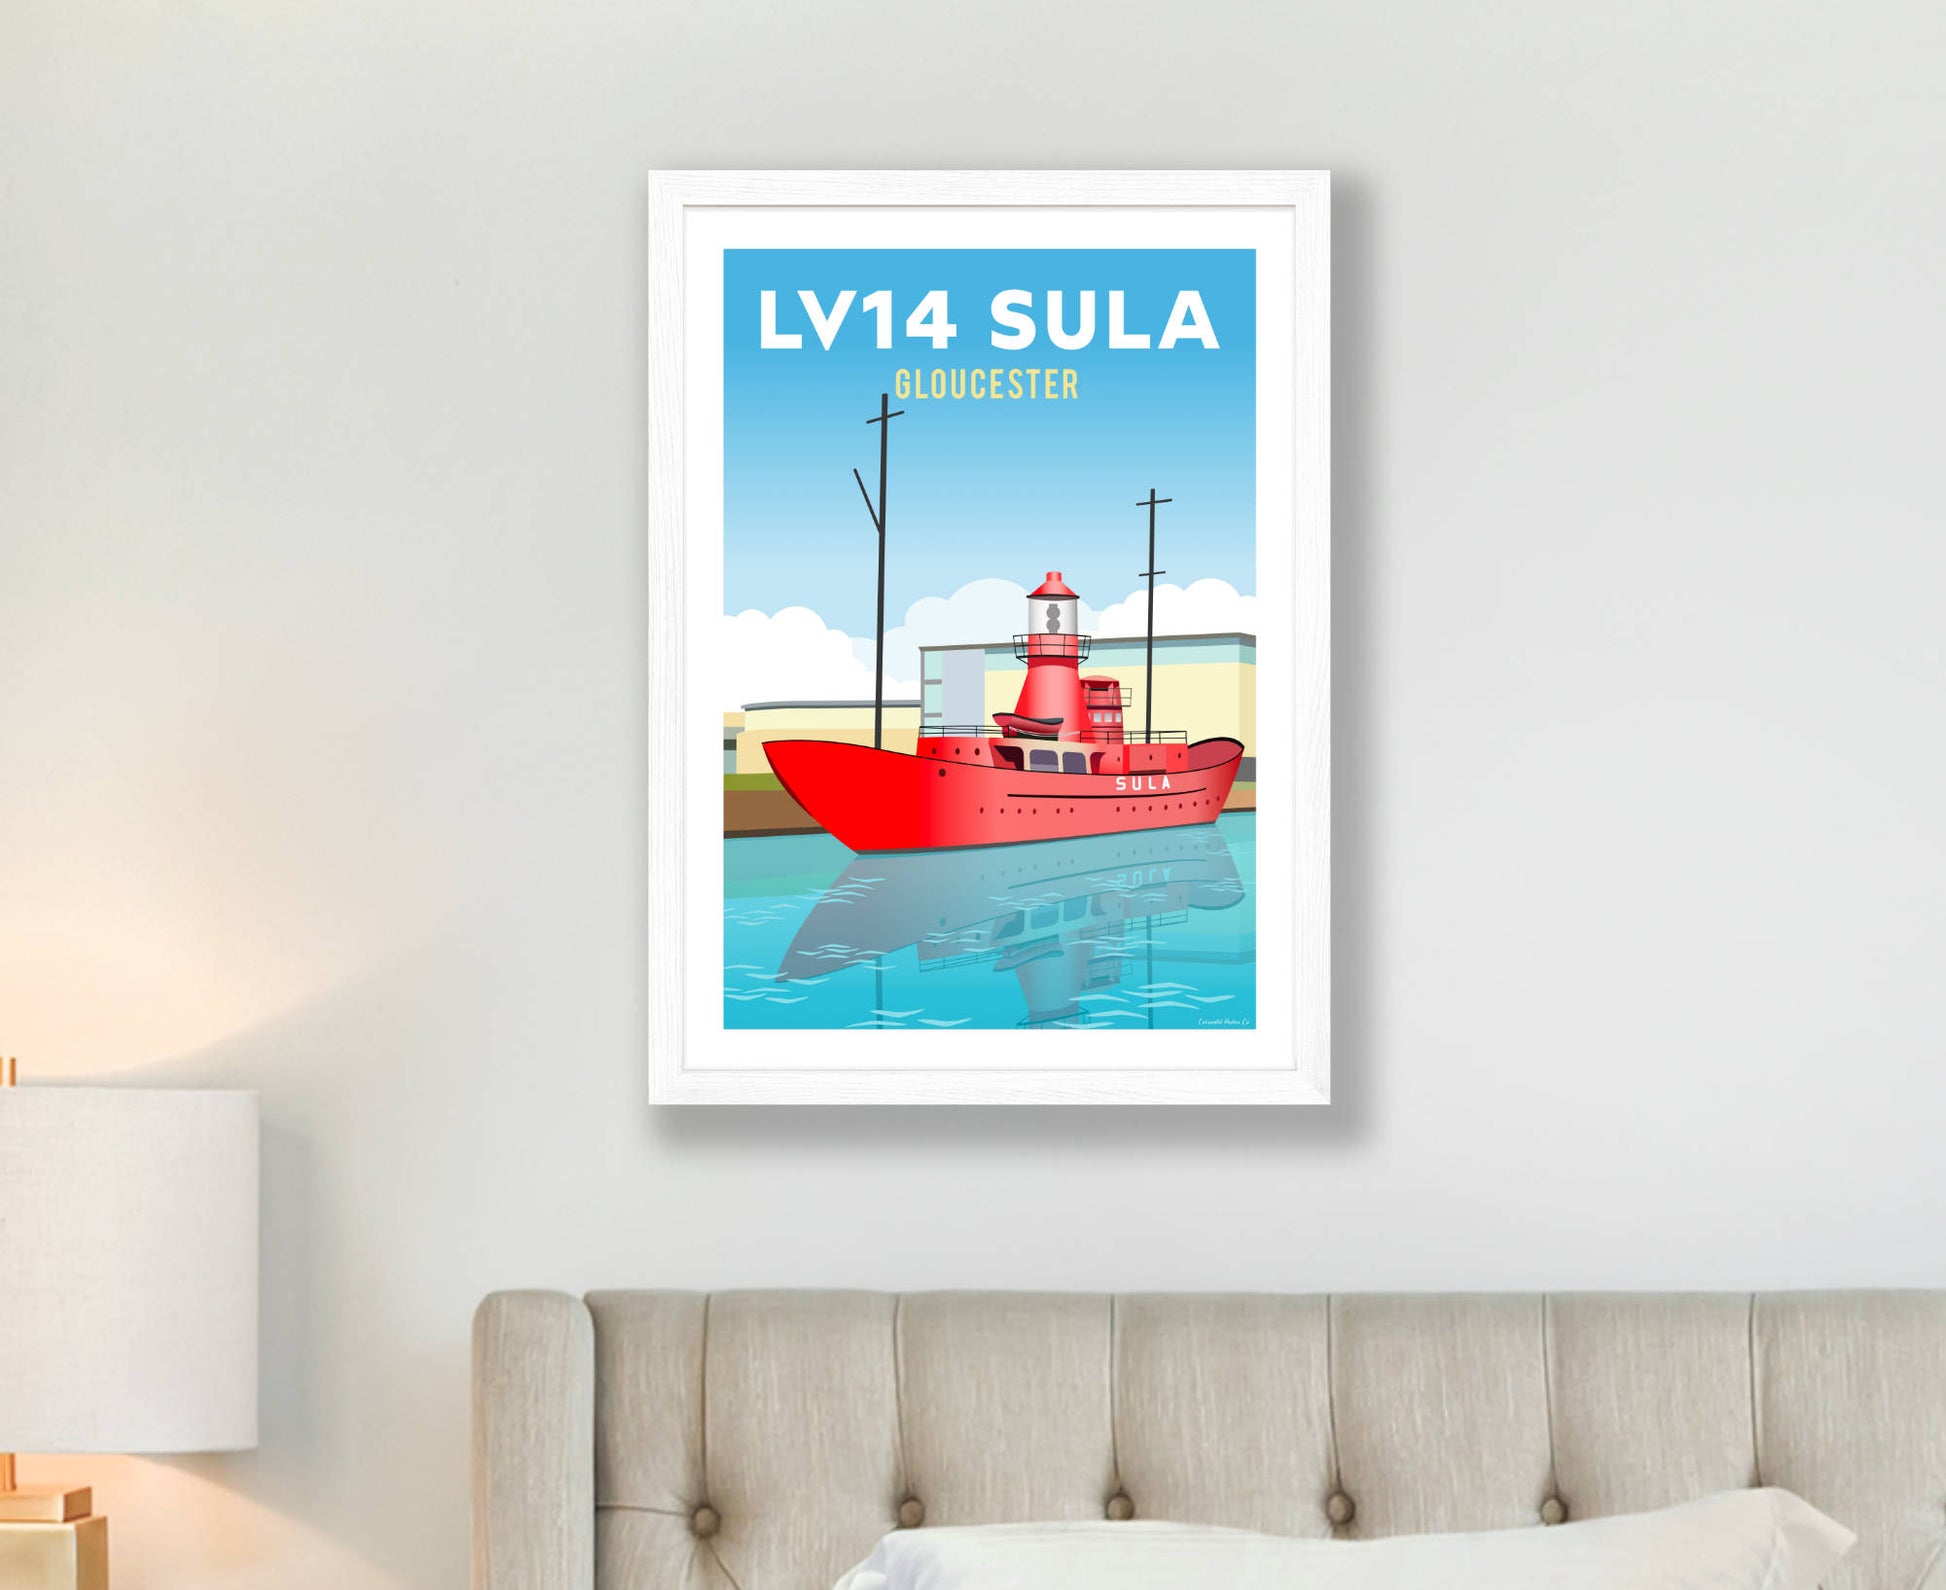 LV14 SULA Lightship Poster in white frame